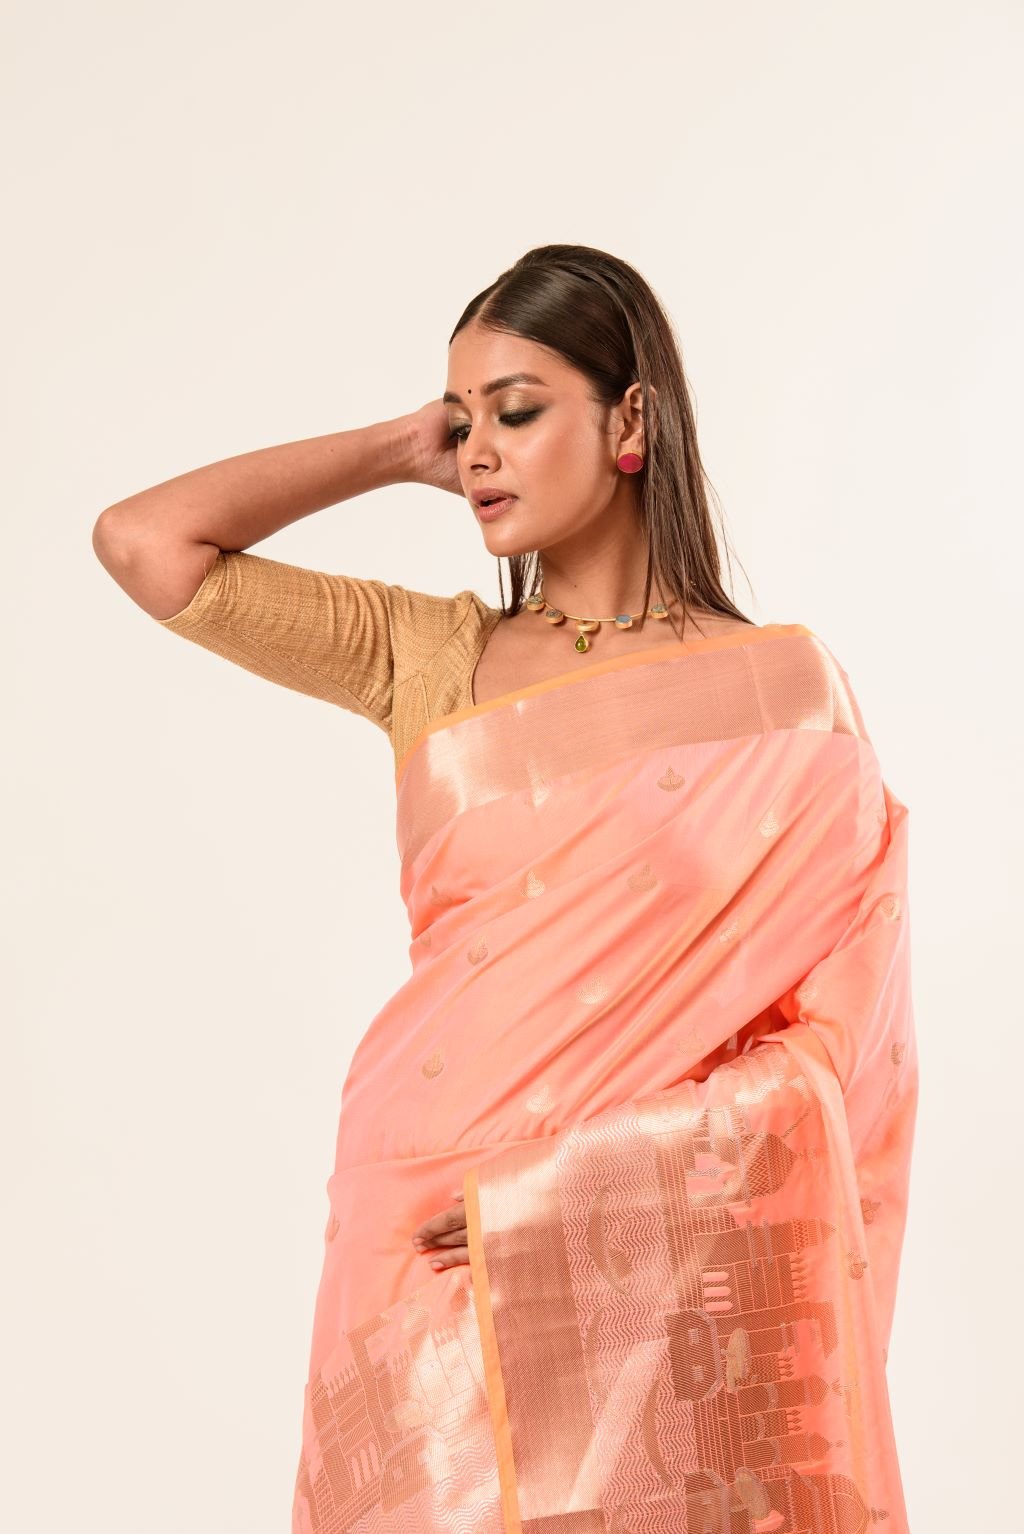 Coral Peach Katan Banarasi Silk Saree With Golden Temple Border - Anvi Couture